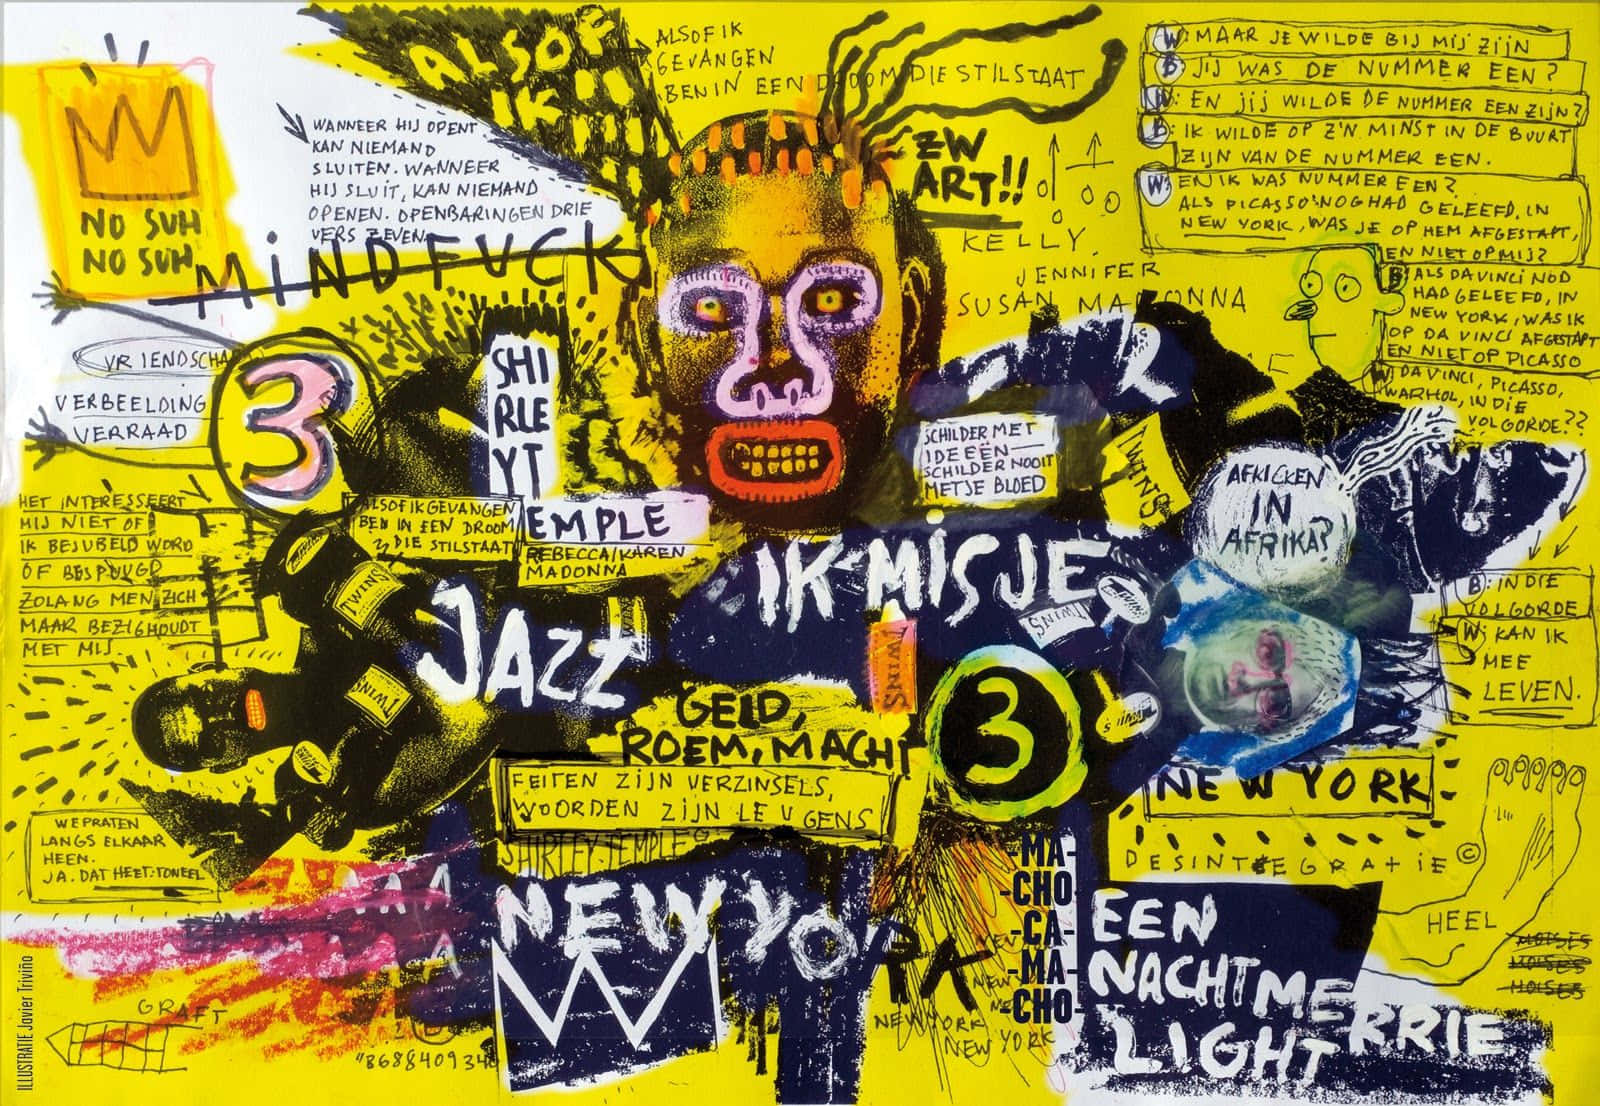 Amazoncojp UntitledJean Michel Basquiat Jean Michel Basquiat Poster  Graffiti Nouveau Art Panel Picture Picture Frame Print Dunframe  Impressionism European Wall Wallpaper Mural Art  159 30x40cm Poster   Home  Kitchen